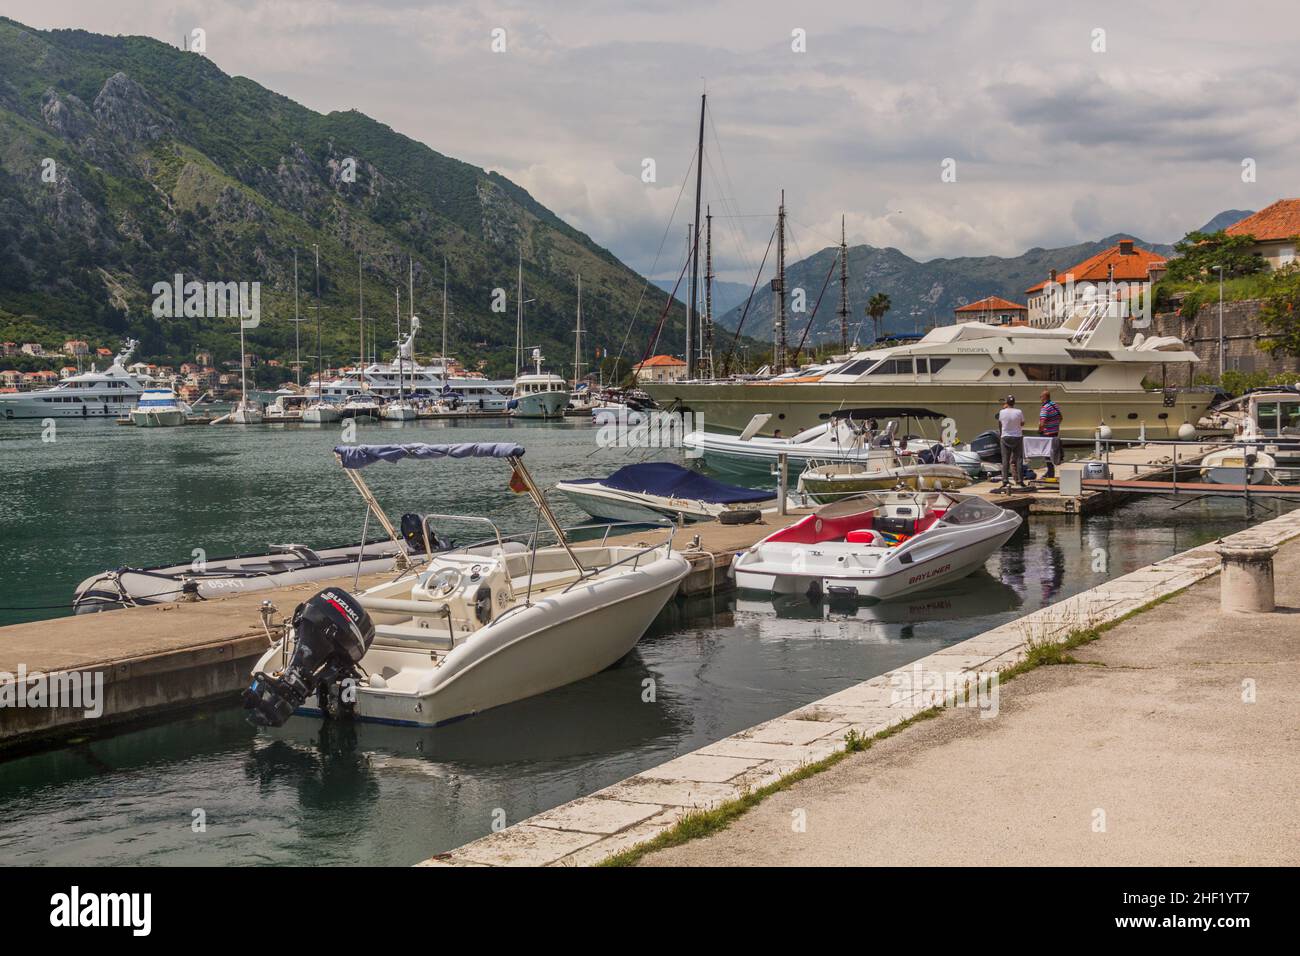 KOTOR, MONTENEGRO - JUNE 1, 2019: Boats in Kotor marina, Montenegro. Stock Photo